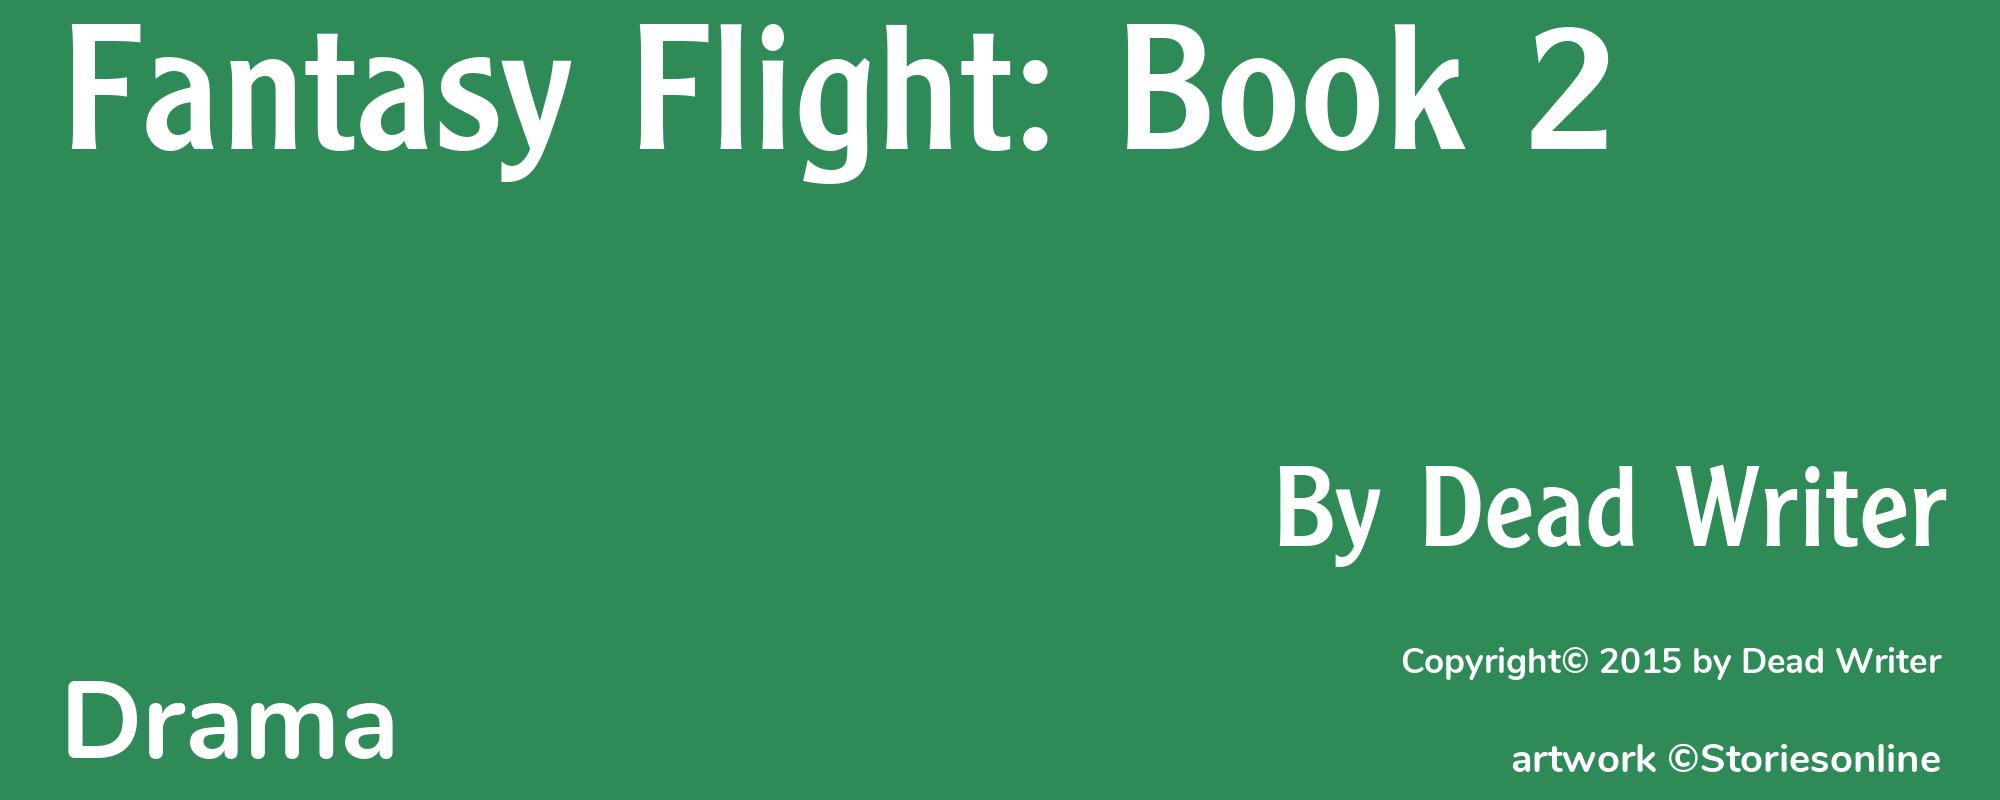 Fantasy Flight: Book 2 - Cover